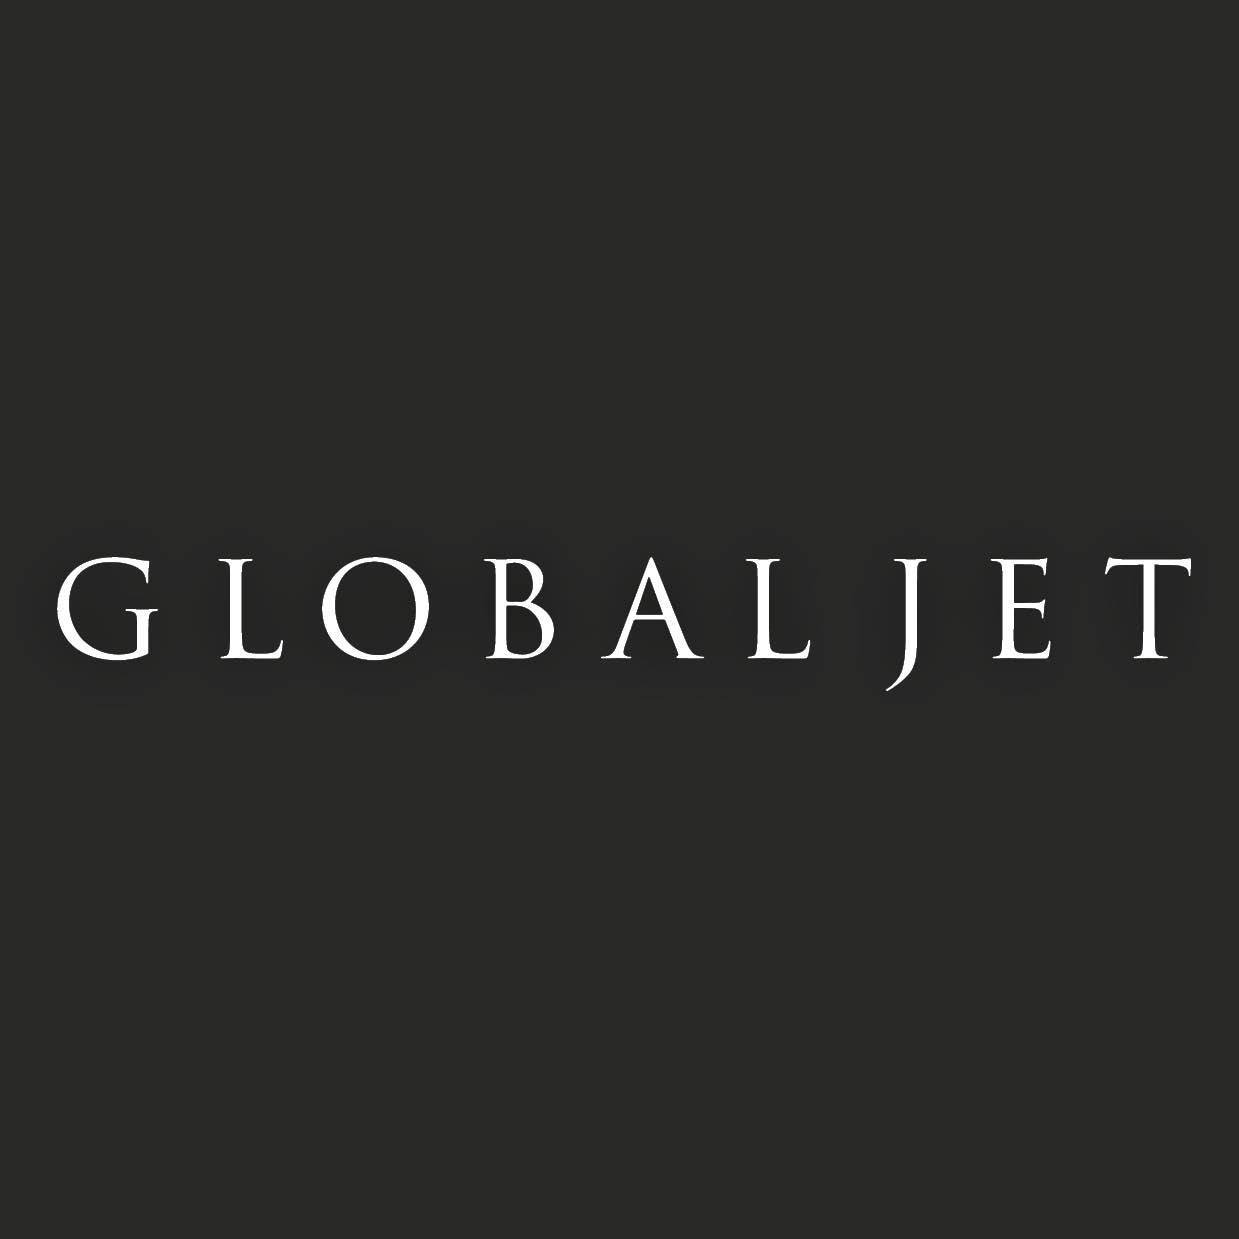 Global Jet logo